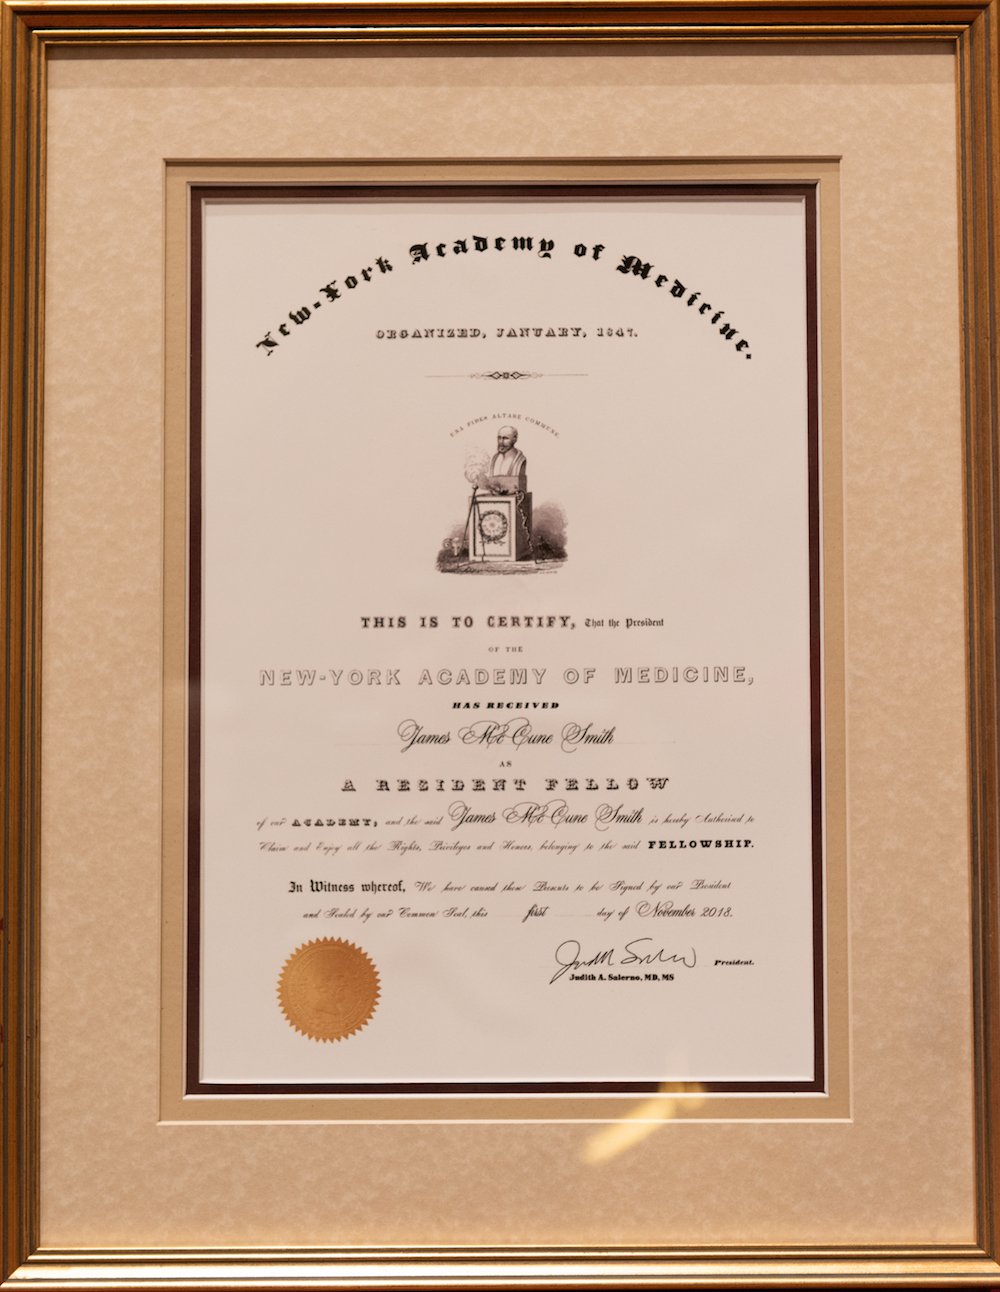 Dr. James McCune Smith's Certificate of Academy Fellowship